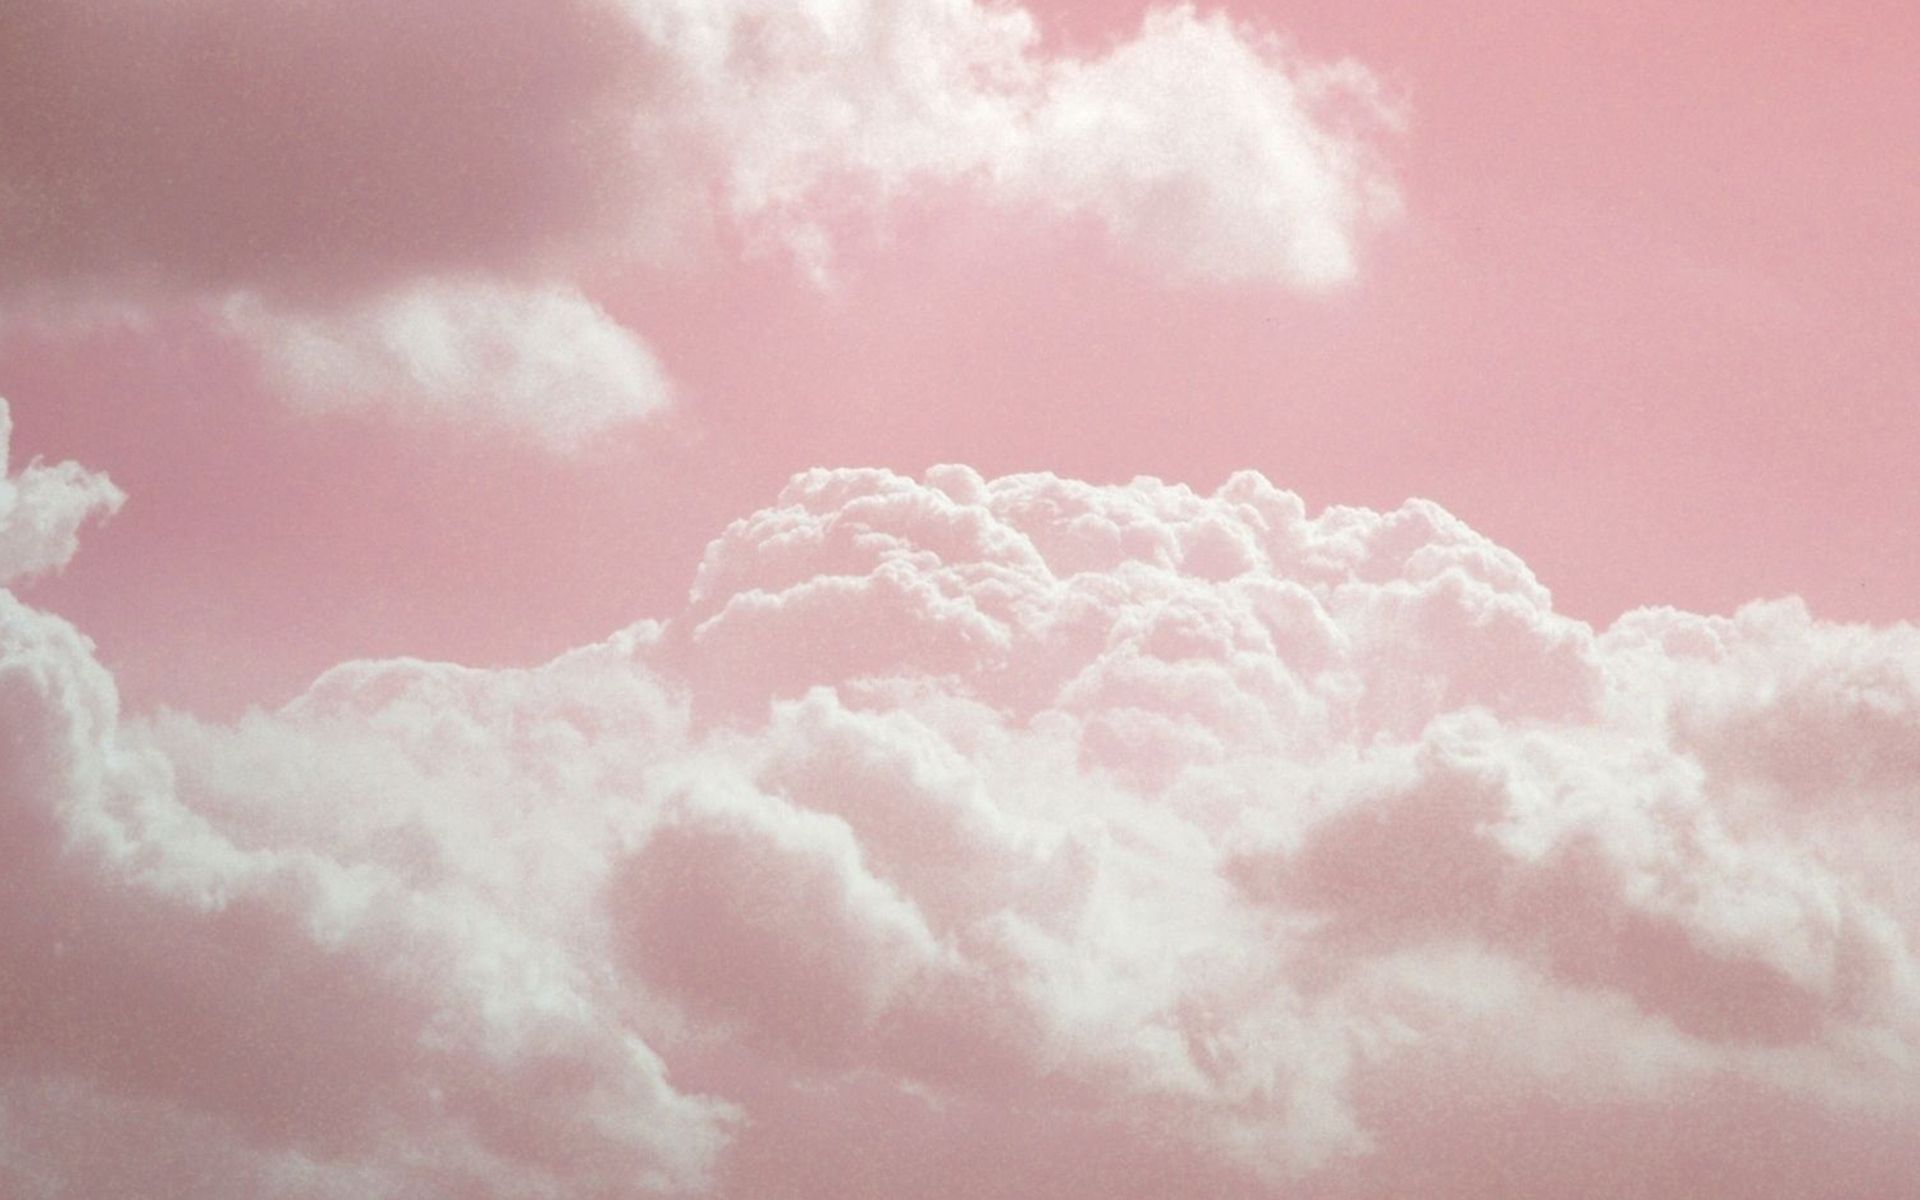 Aesthetic Pink Cloud HD Wallpaper Free download